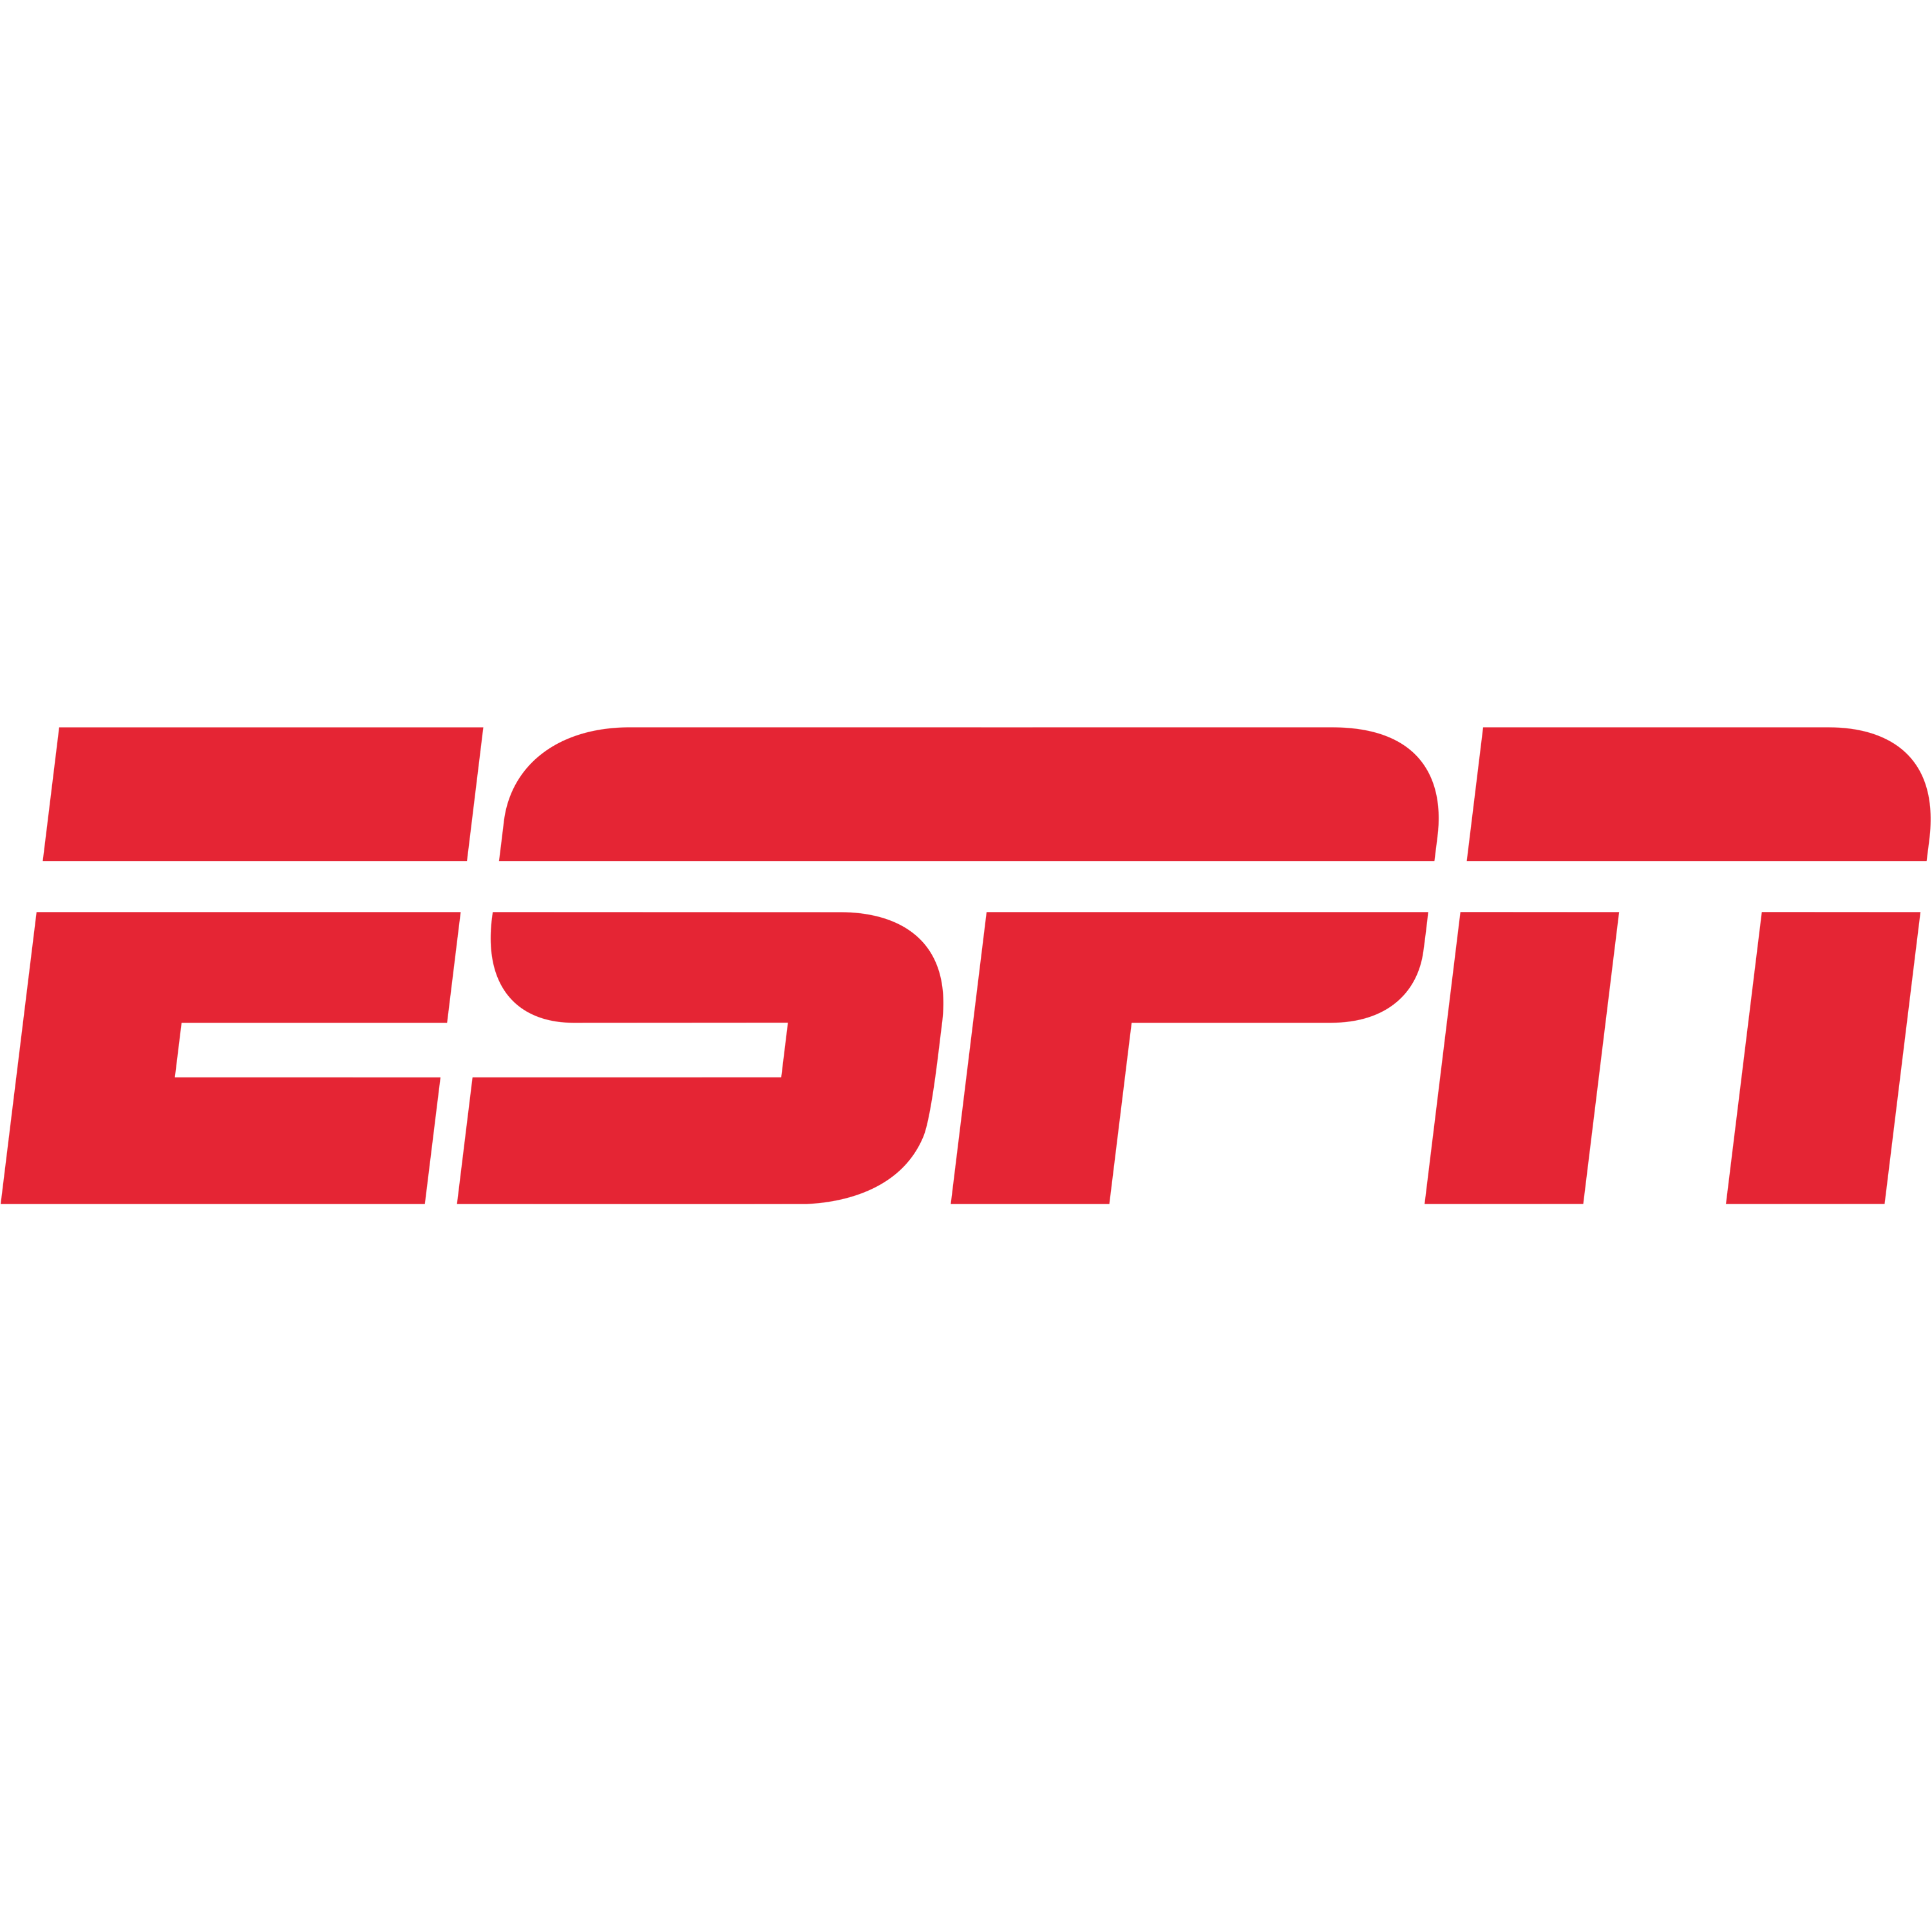 ESPN Logo Transparent Image